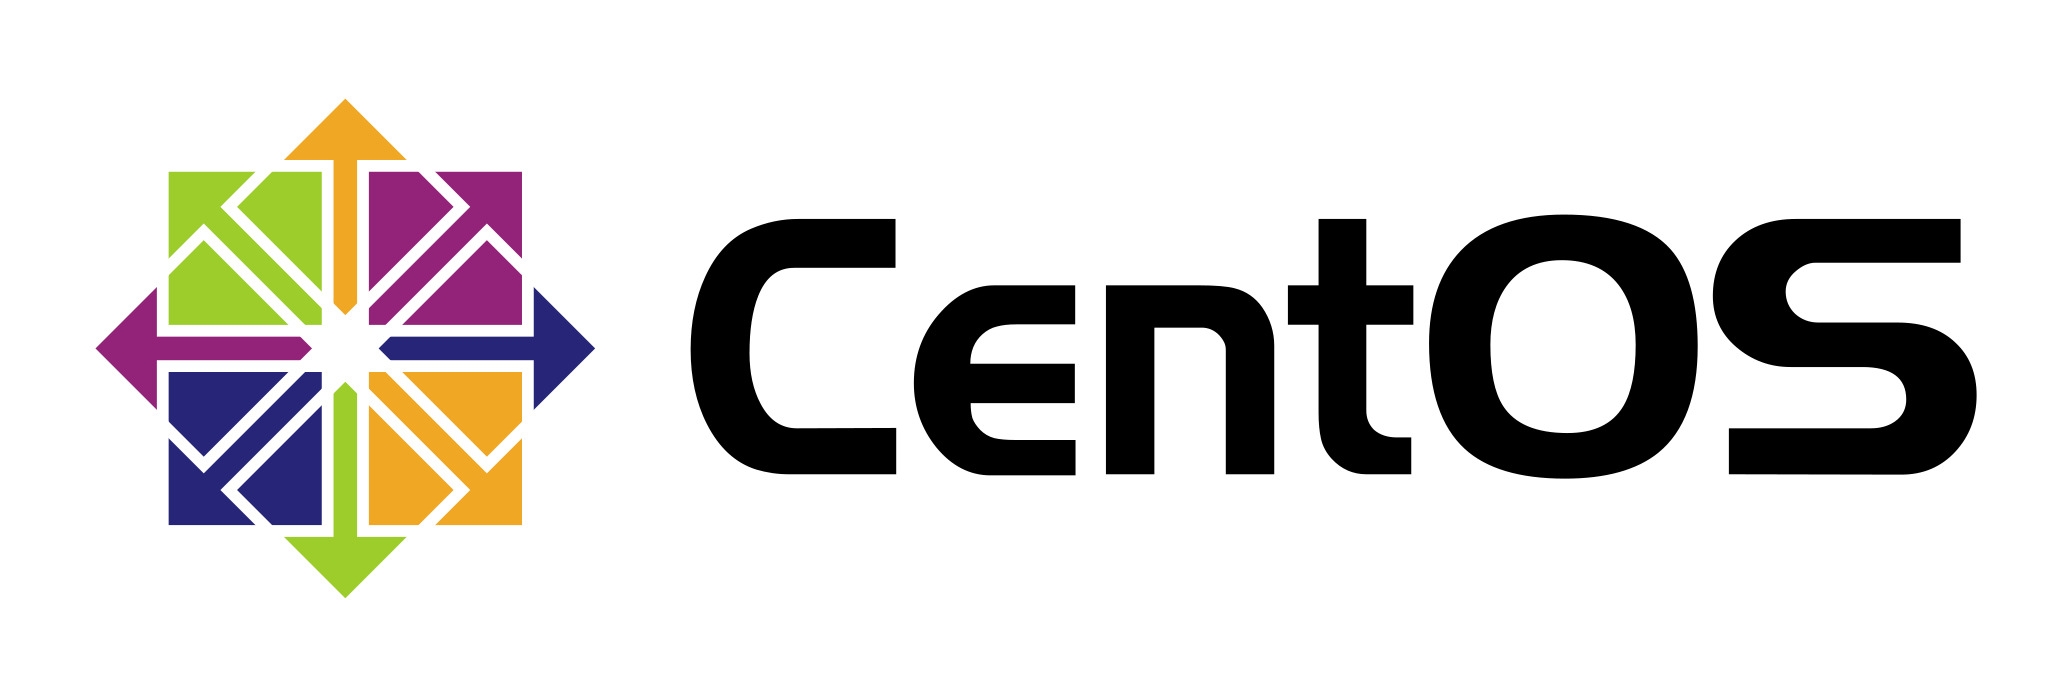 CentOS logo- Wikimedia Commons